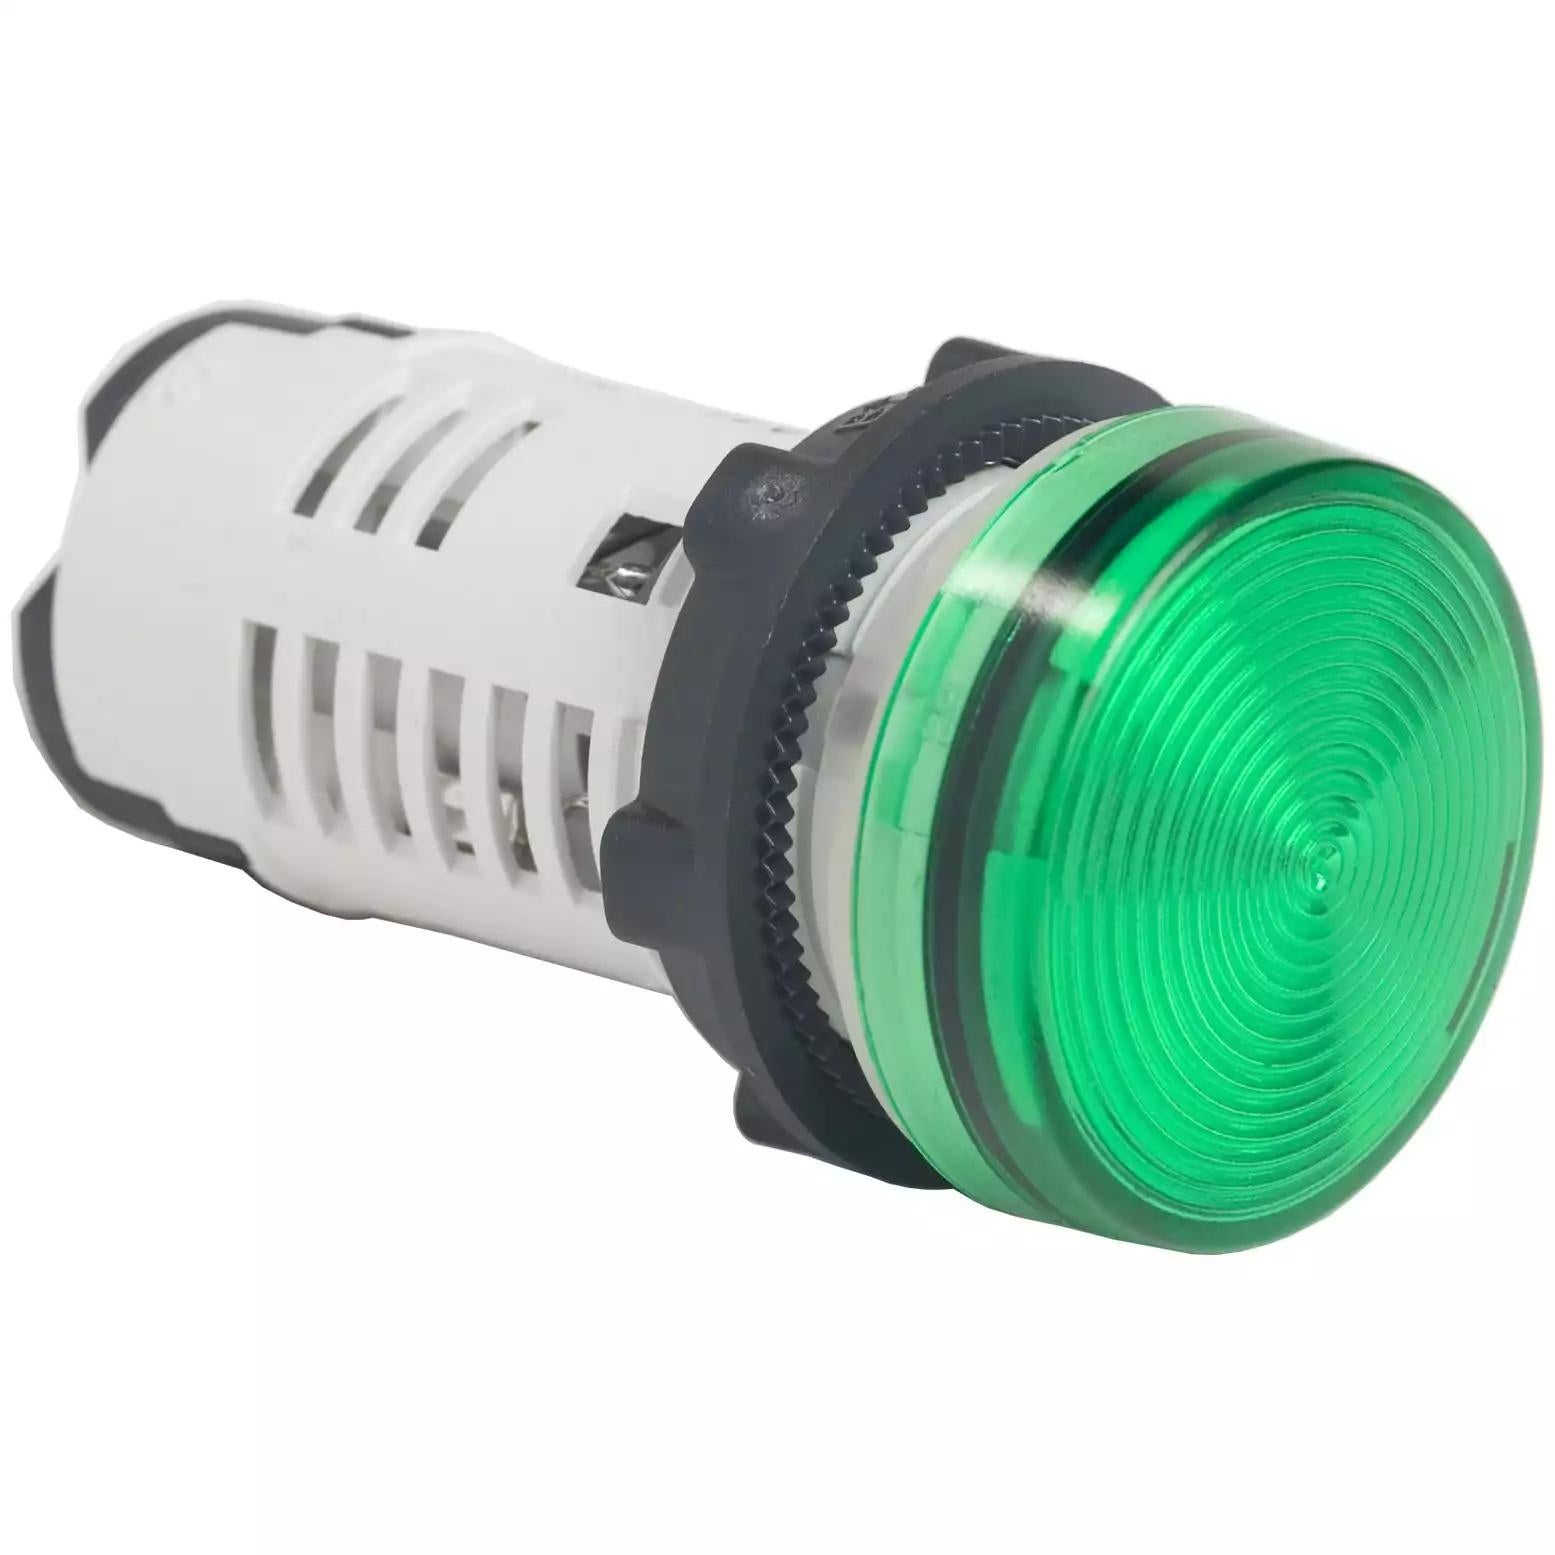 Monolithic pilot light, Harmony XB7, plastic, green, 22mm, integral LED, 110...120V AC